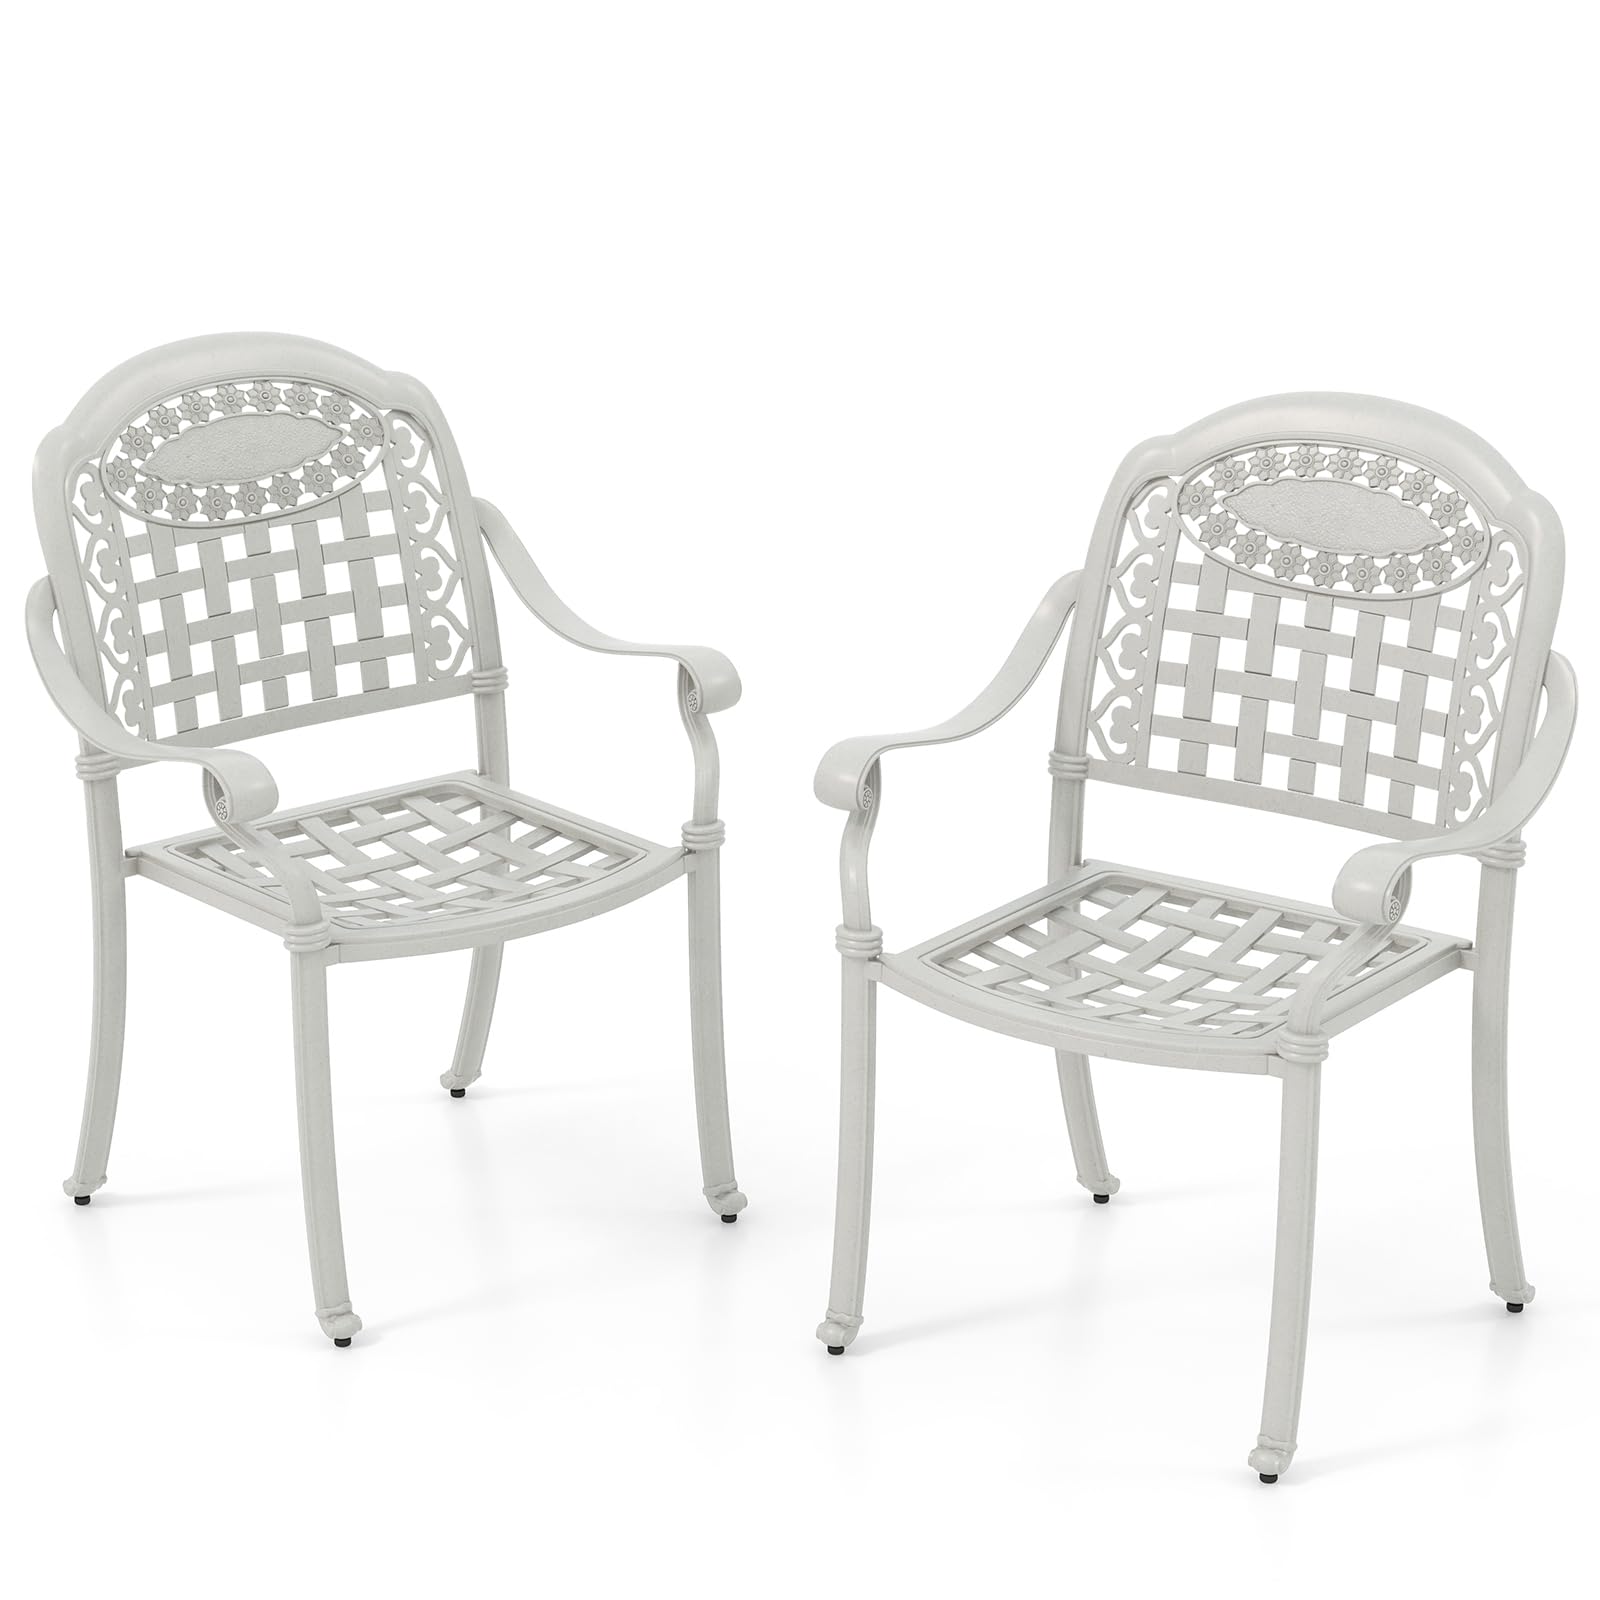 Giantex Stackable Outdoor Chairs Set of 4